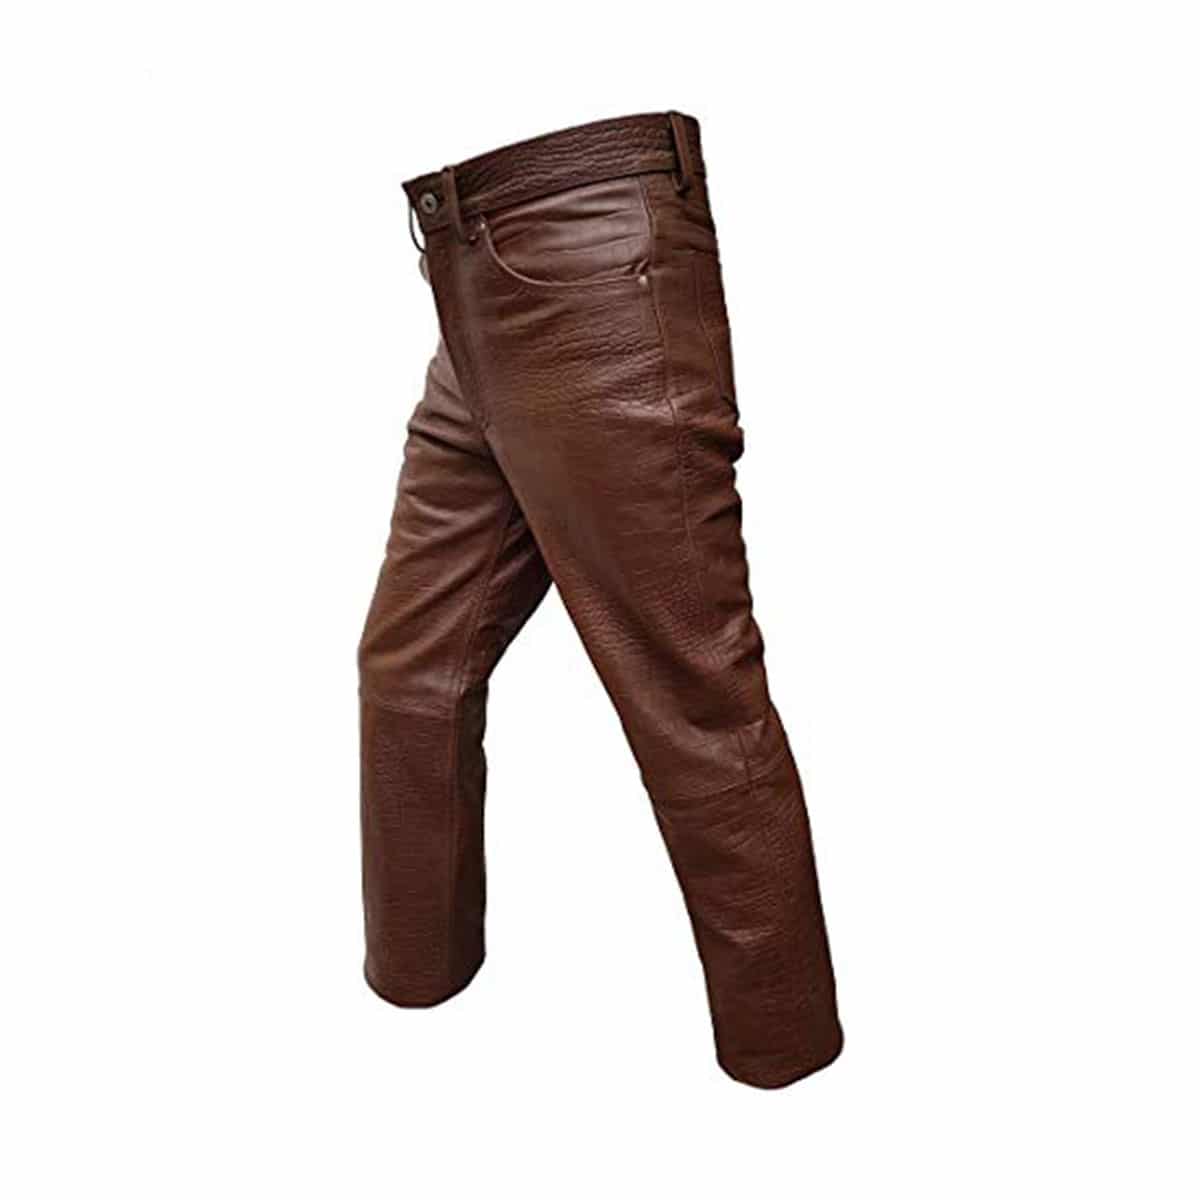 Men Crocodile Print 501 Style Brown Leather Jeans Pants Trouser Bikers Club-501